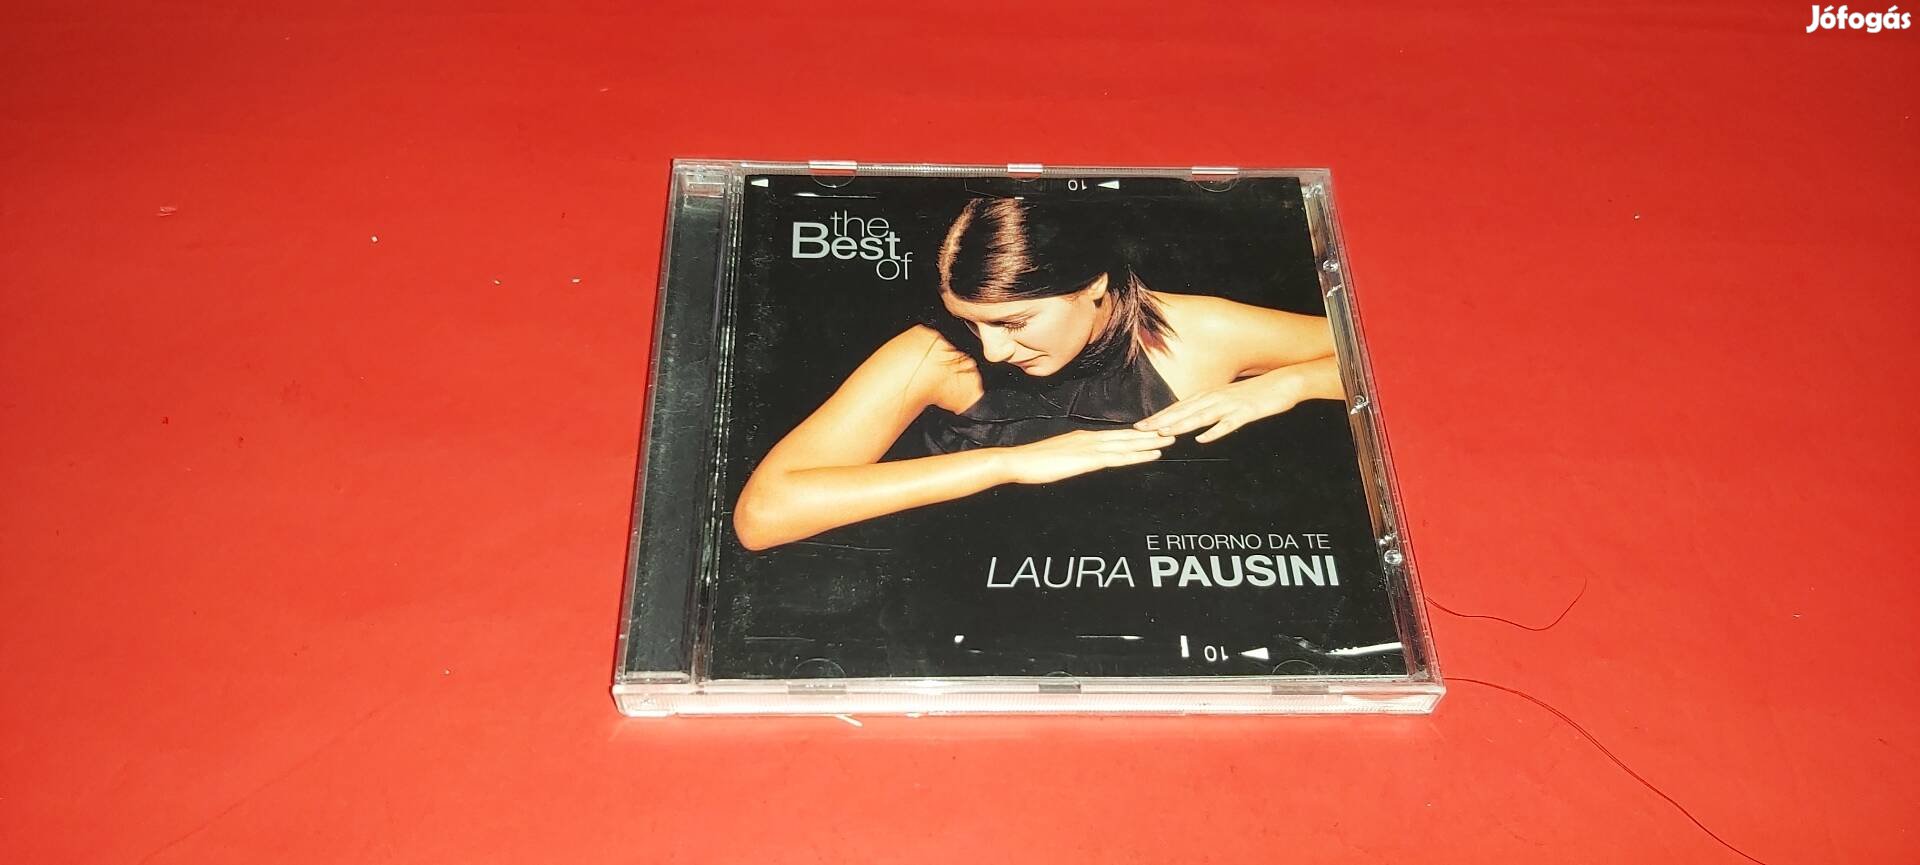 Laura Pausini Best E Ritorno da te Cd 2001